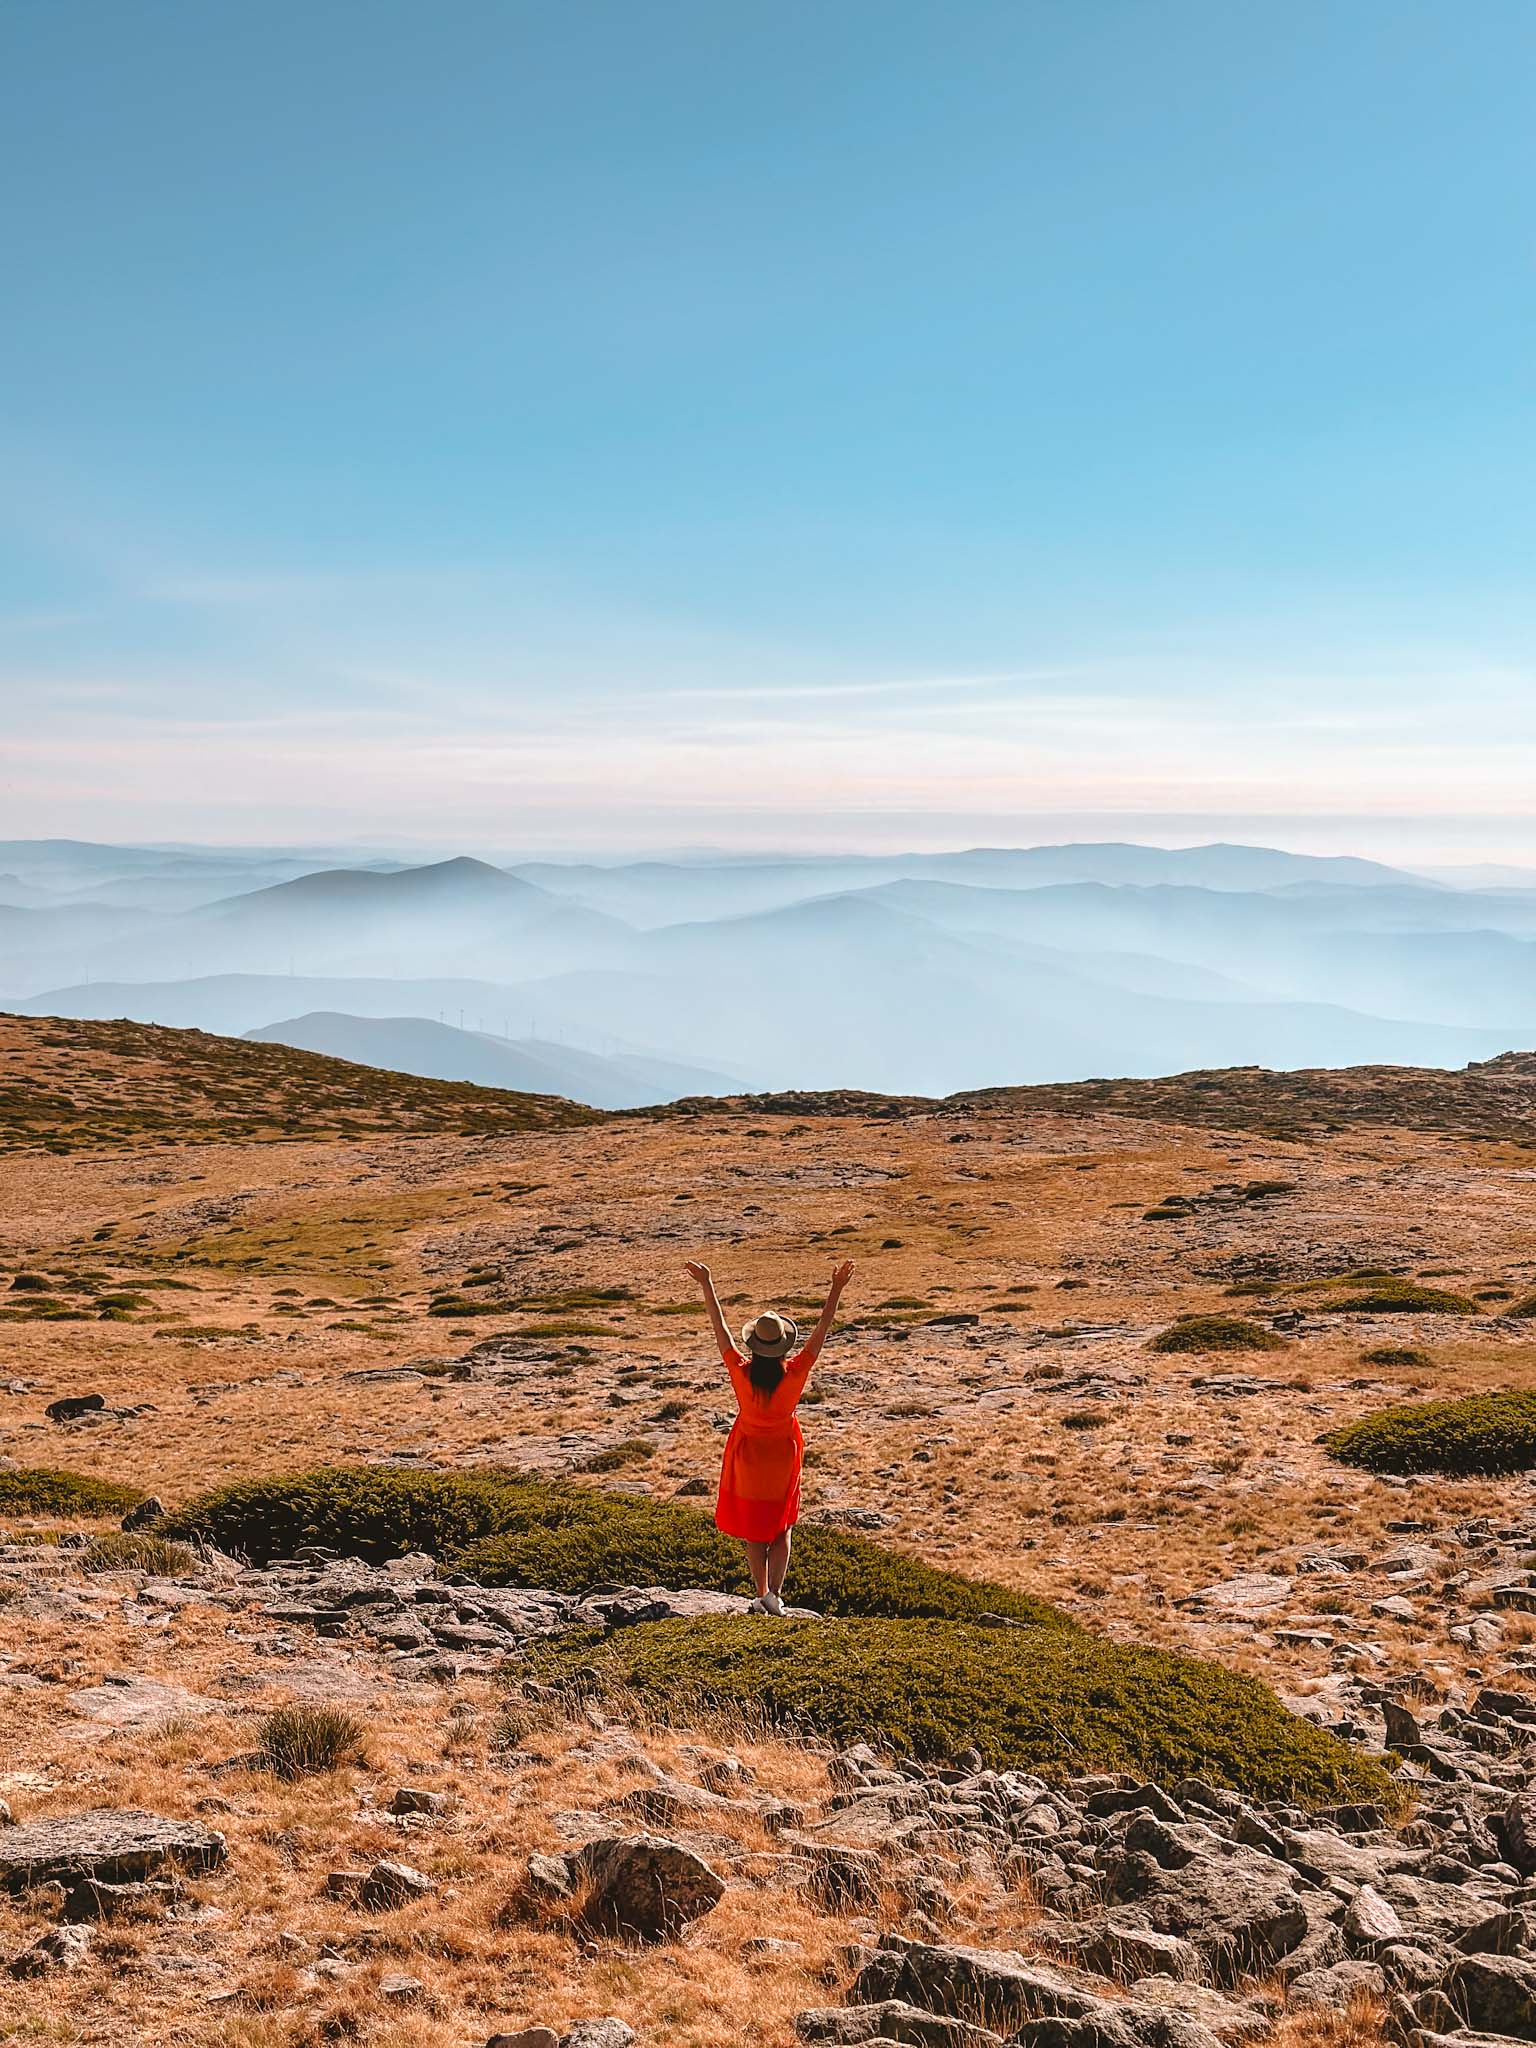 Serra da Estrela mountain in Portugal - best things to do in Portugal